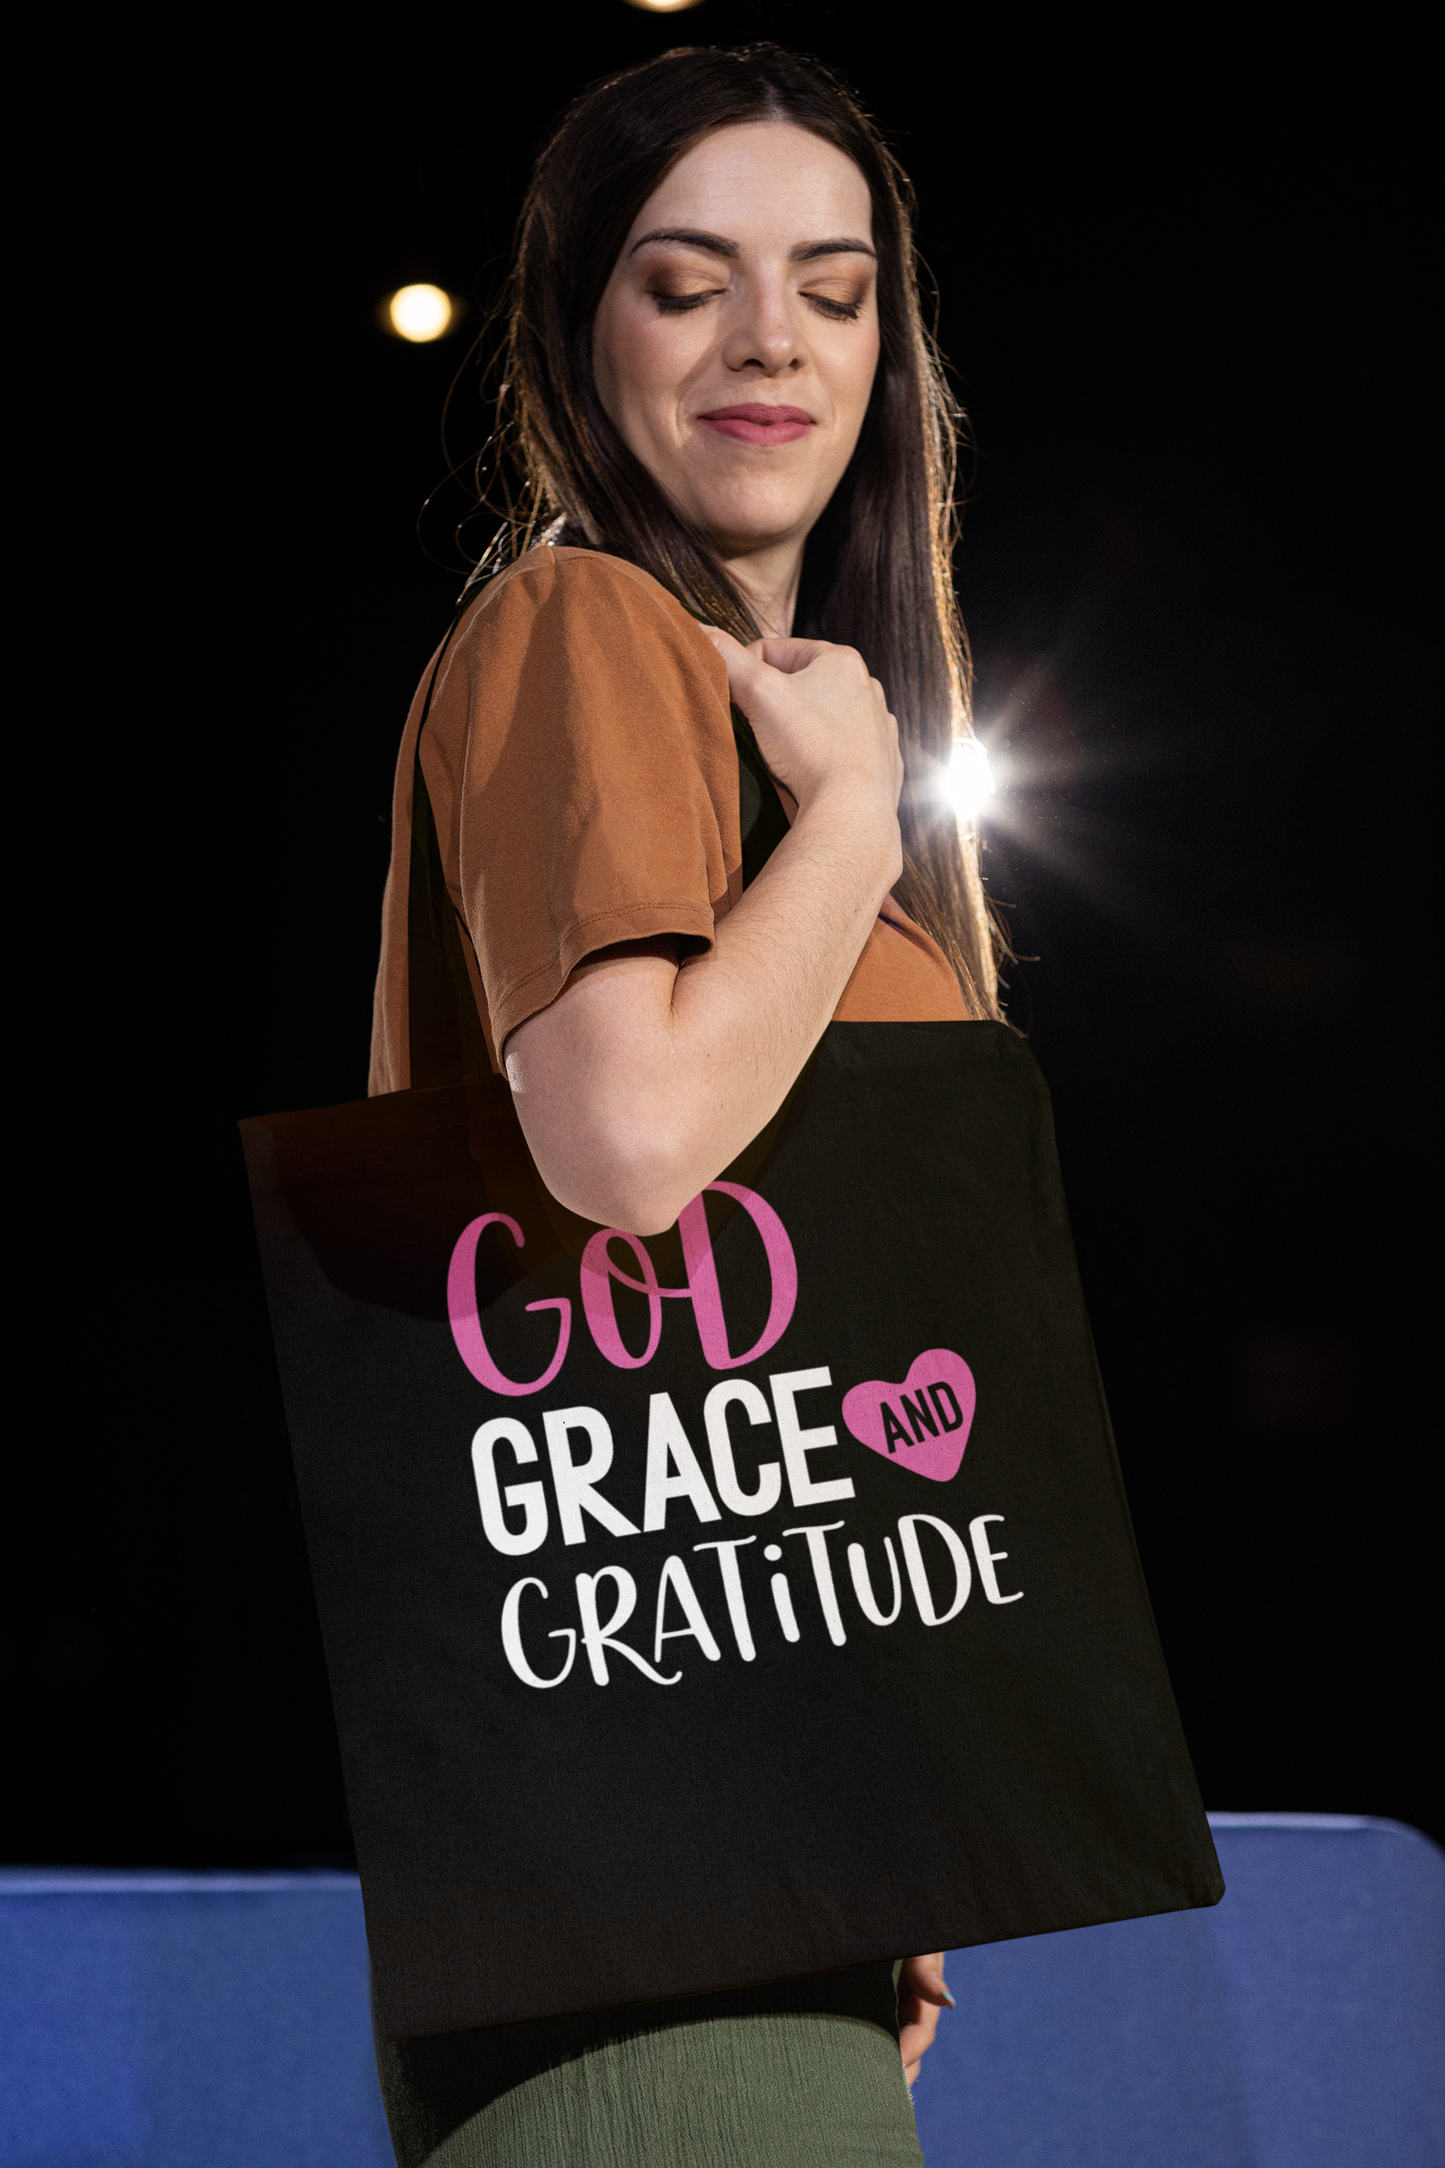 "God, Grace, and Gratitude" Christian Tote Bag